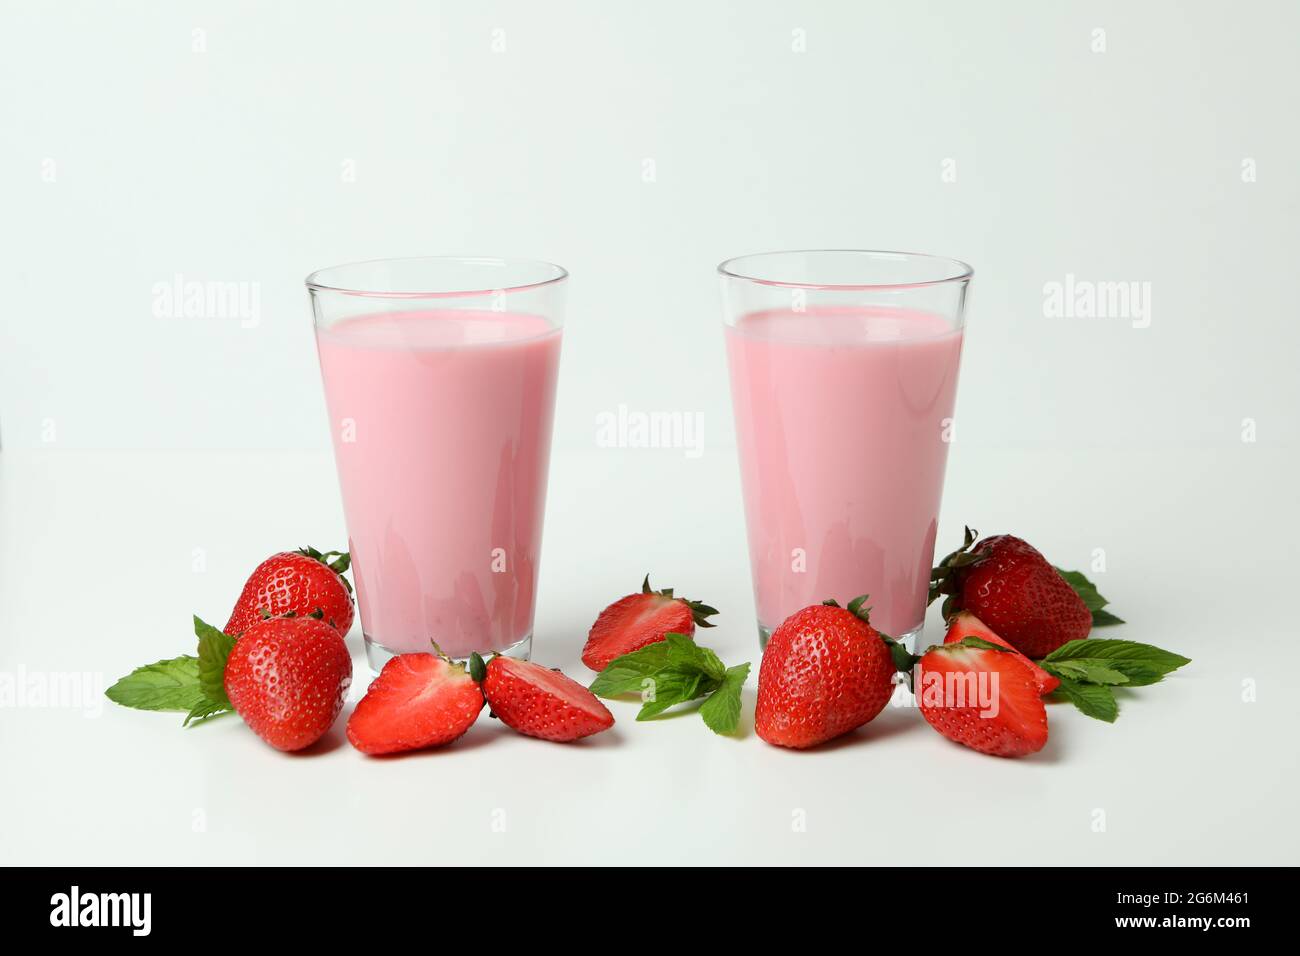 https://c8.alamy.com/comp/2G6M461/glasses-of-strawberry-milkshake-and-ingredients-on-white-background-2G6M461.jpg